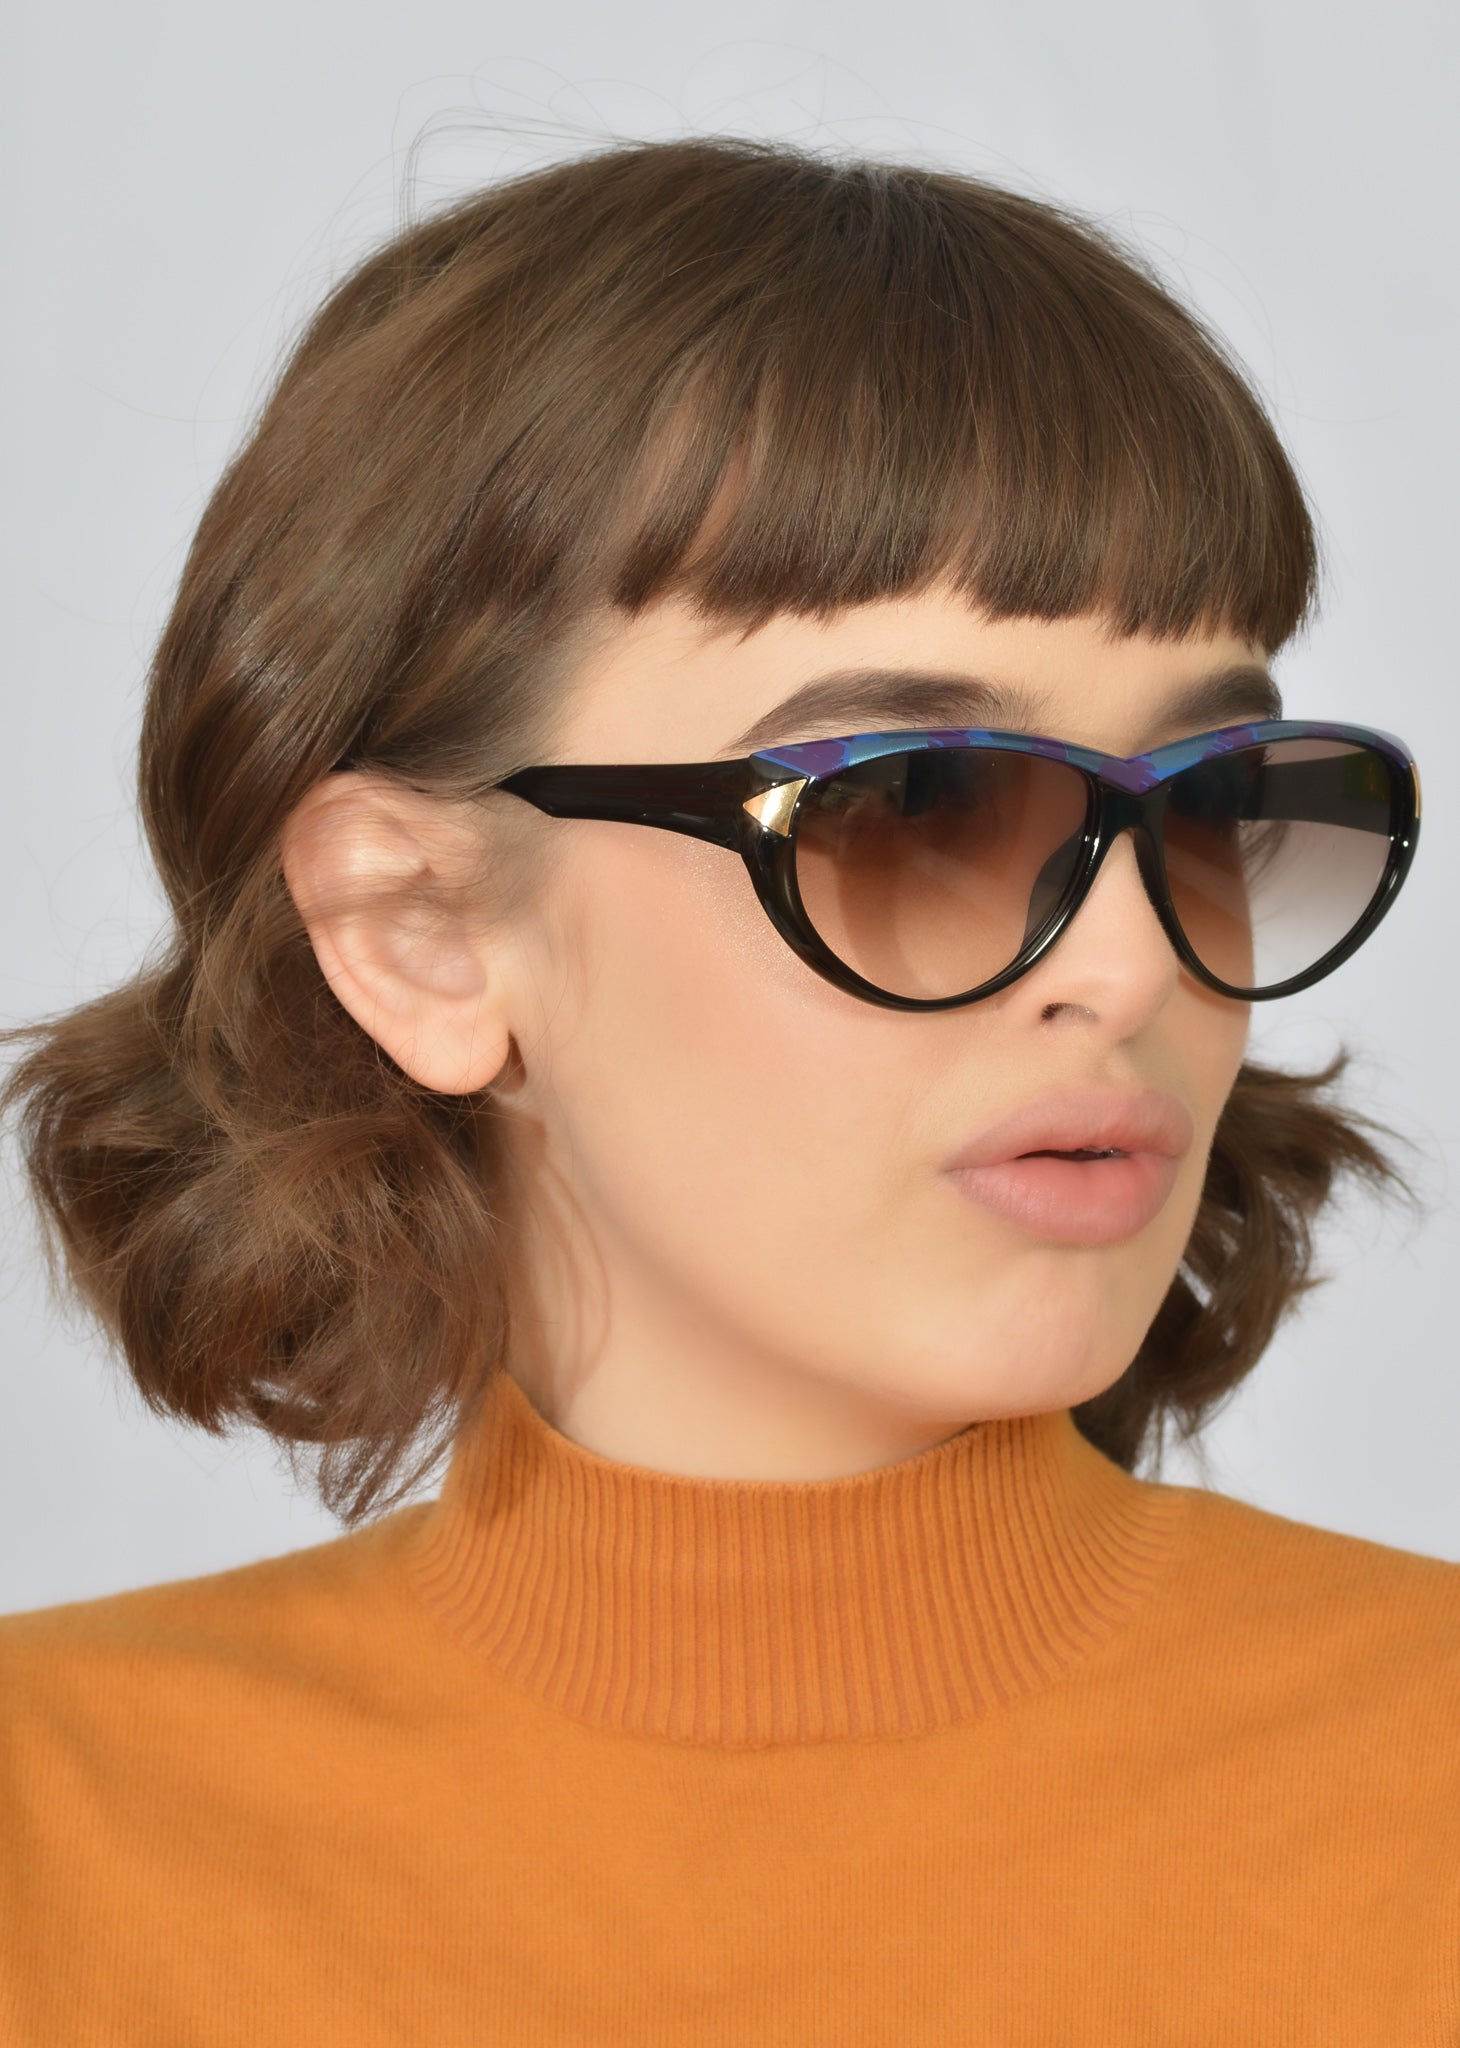 Viennaline 1967 50 vintage sunglasses. Designer vintage sunglasses. Womens Sunglasses. Vintage sunglasses. 1980's sunglasses. Cat eye sunglasses.